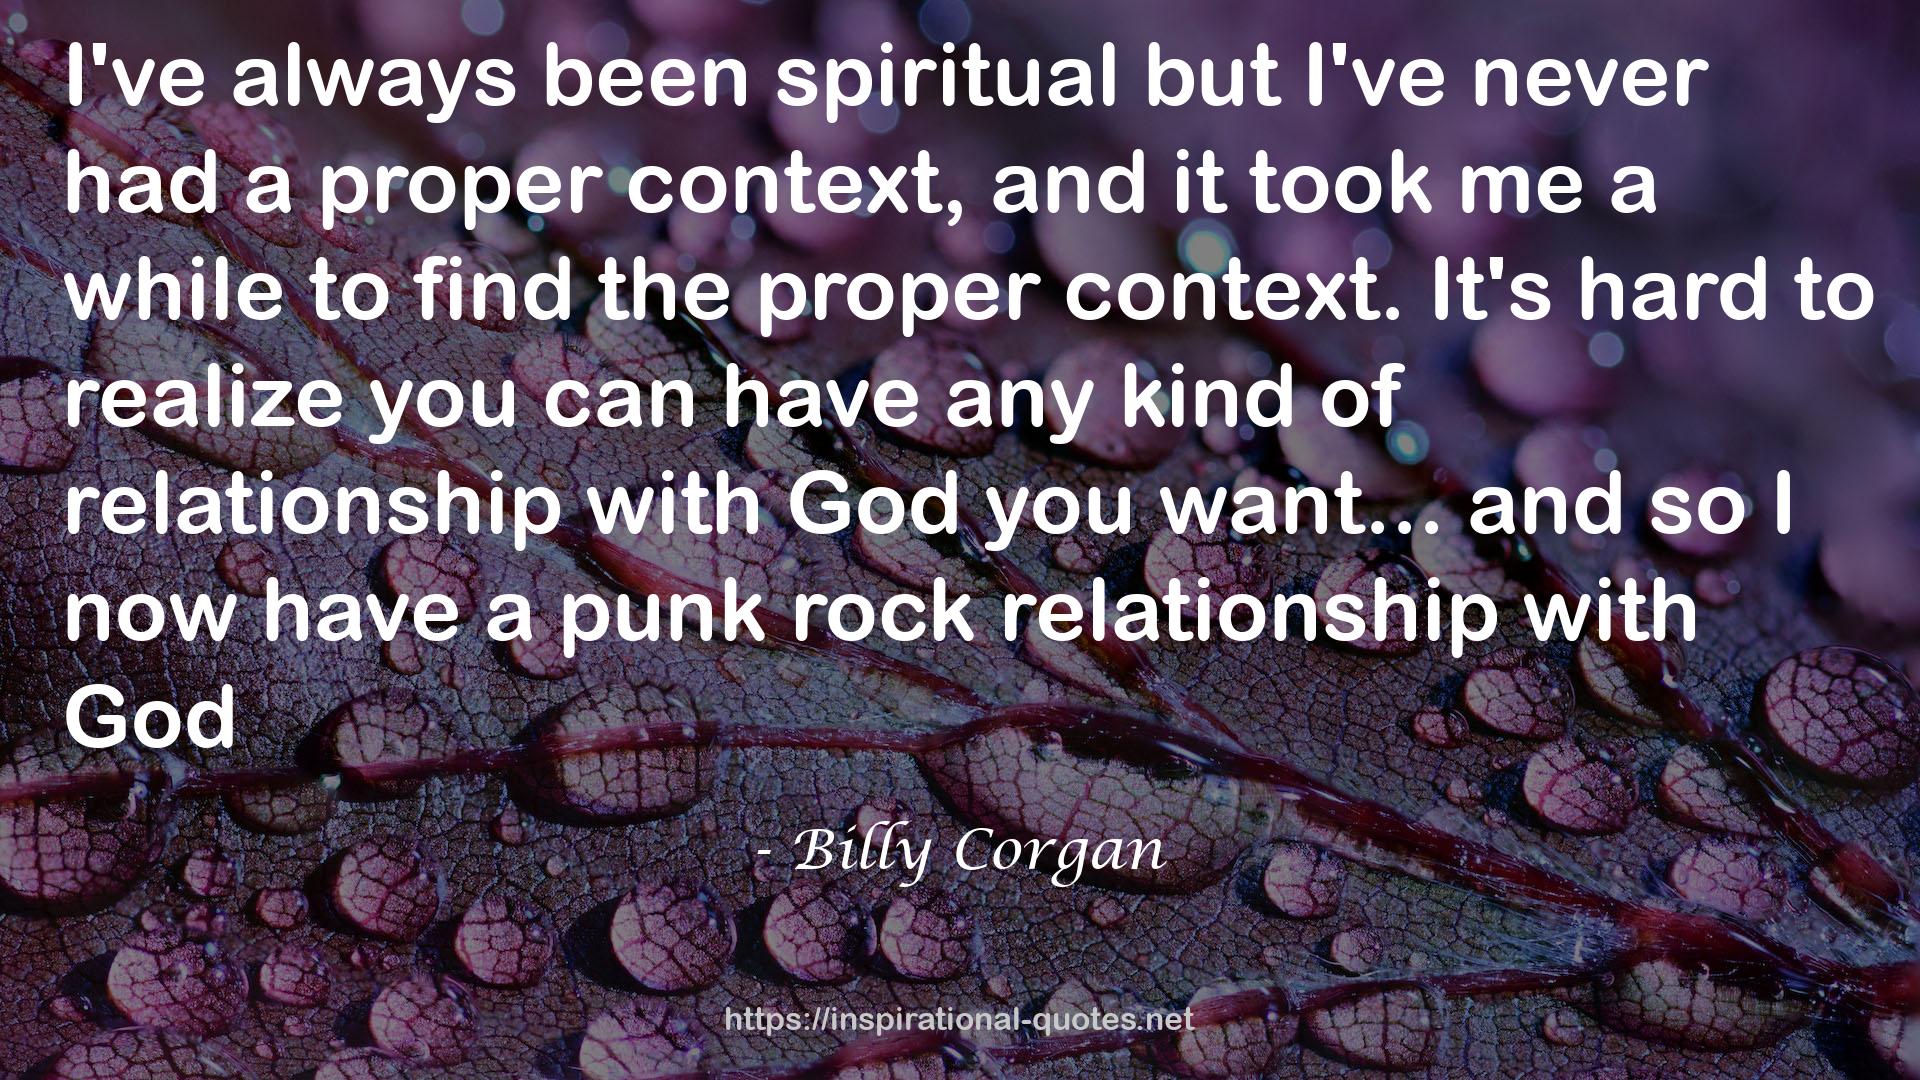 Billy Corgan QUOTES